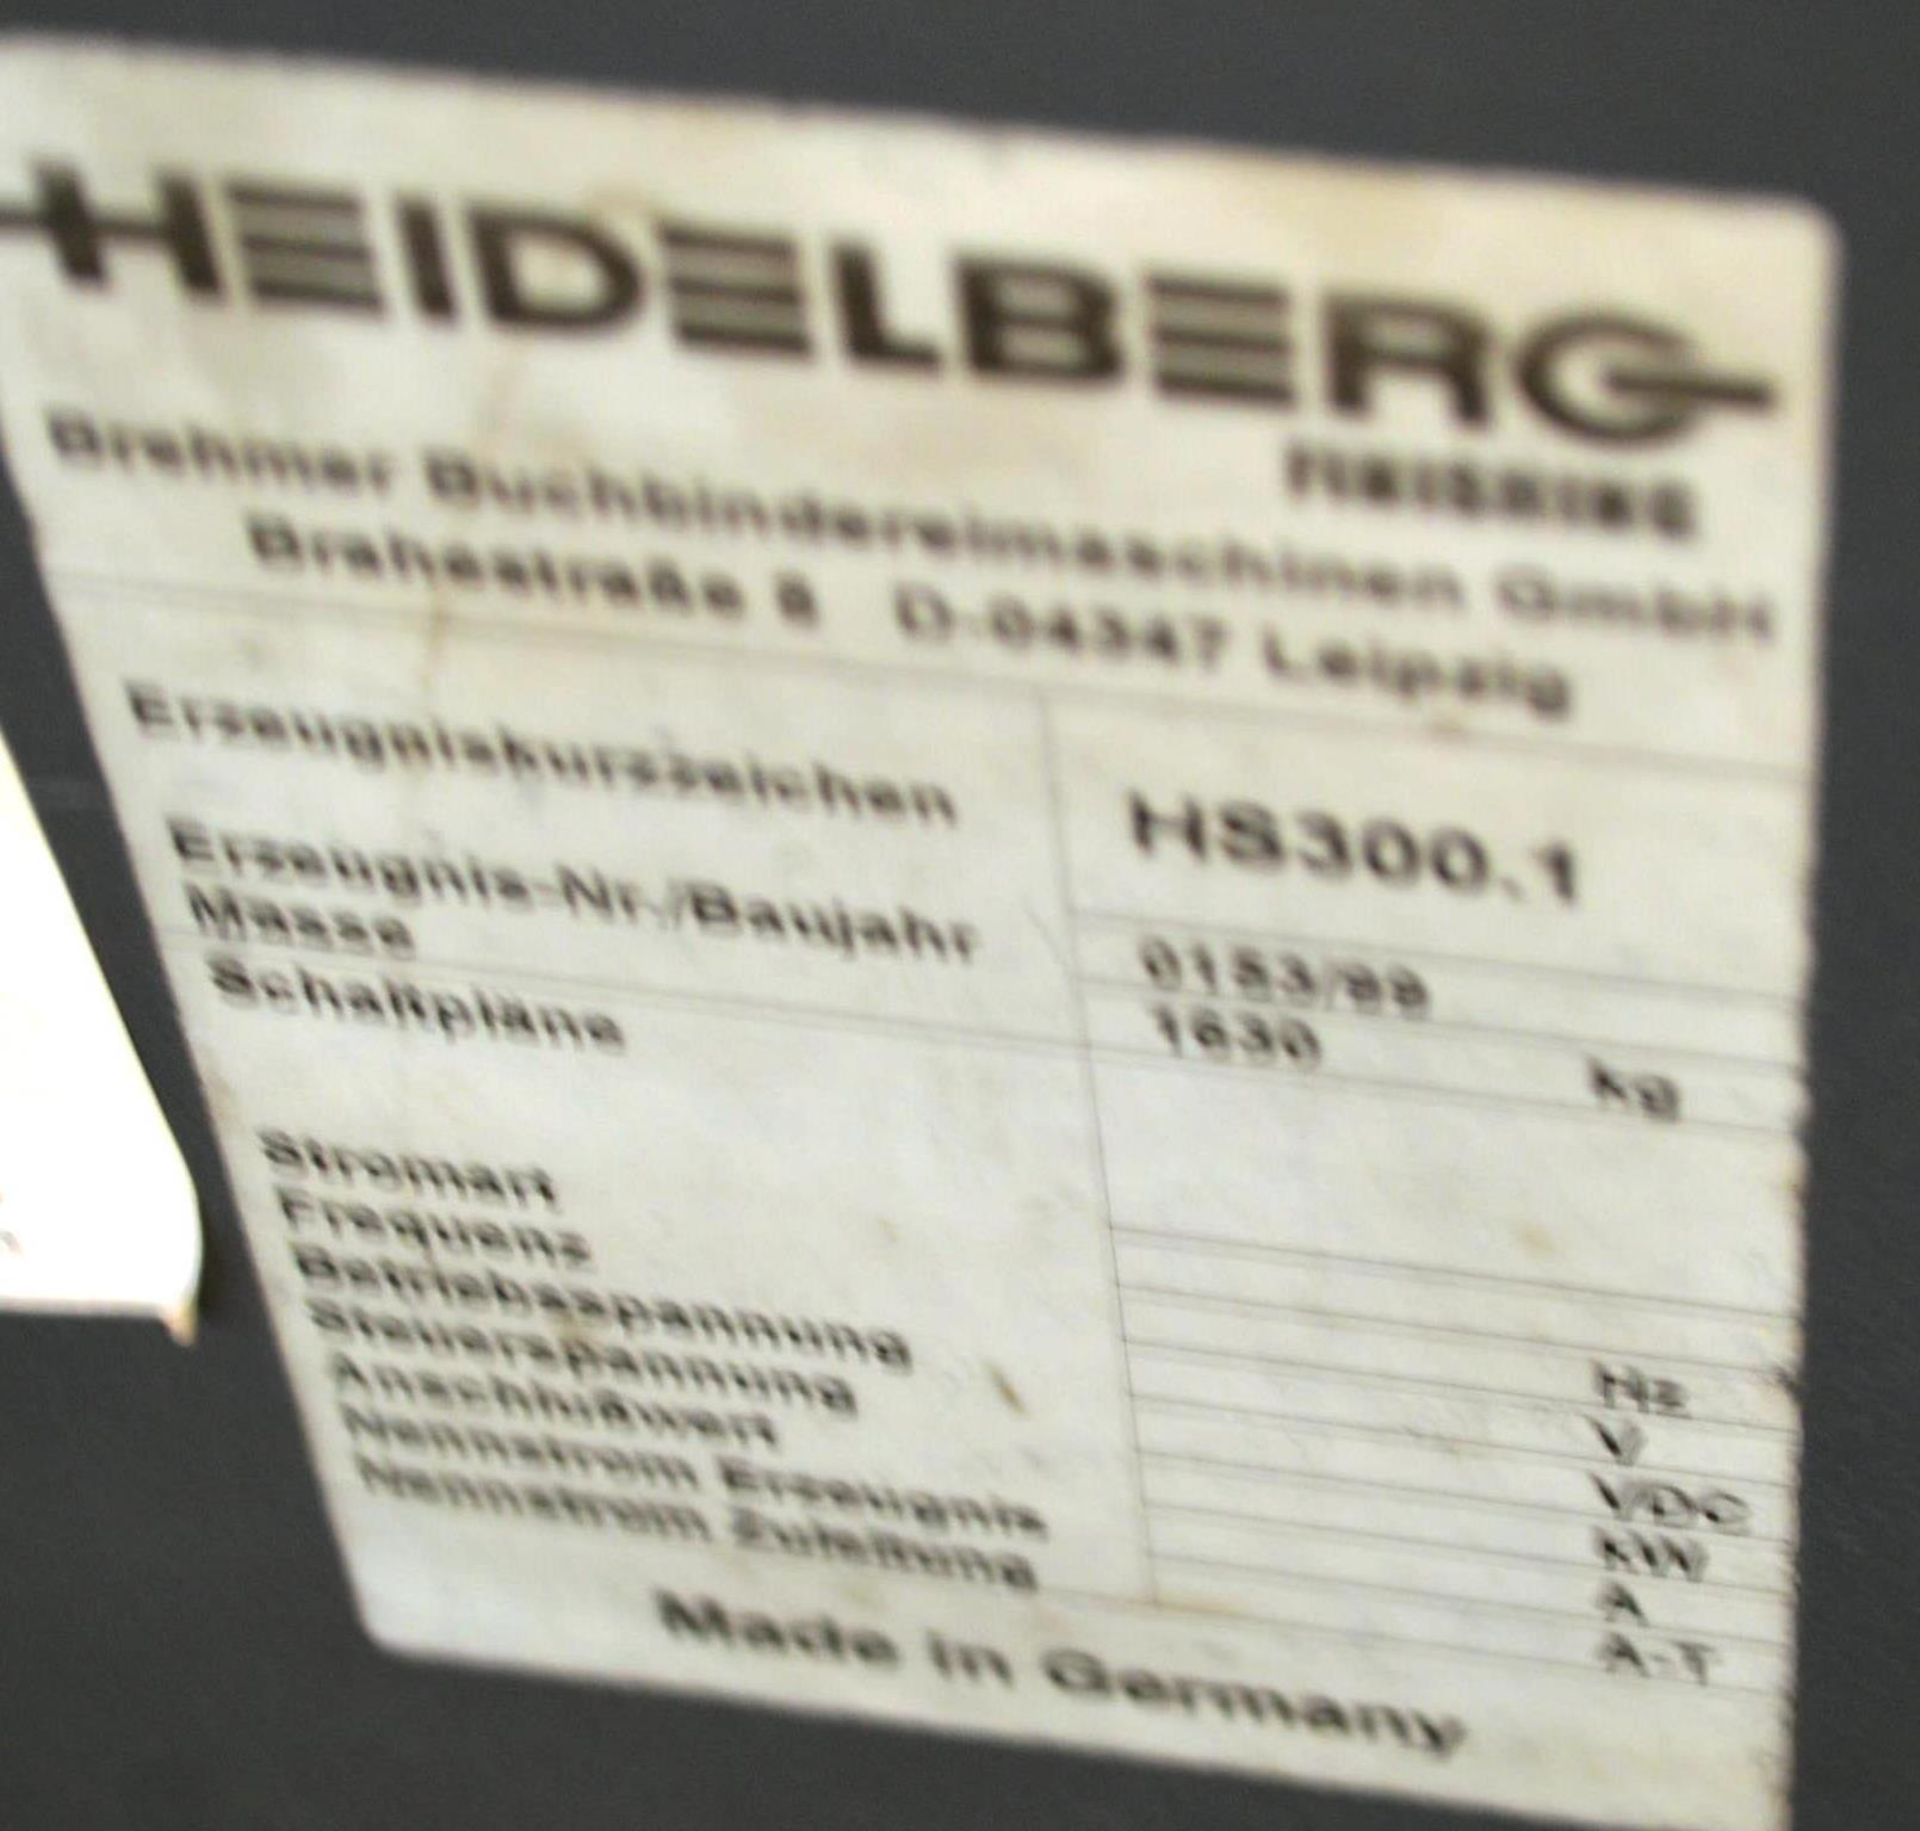 Heidelberg ST 3001.1 6+1 SADDLE STITCHING LINE, comprising: - six feed units, UFA300.1 cover feeder, - Image 7 of 11